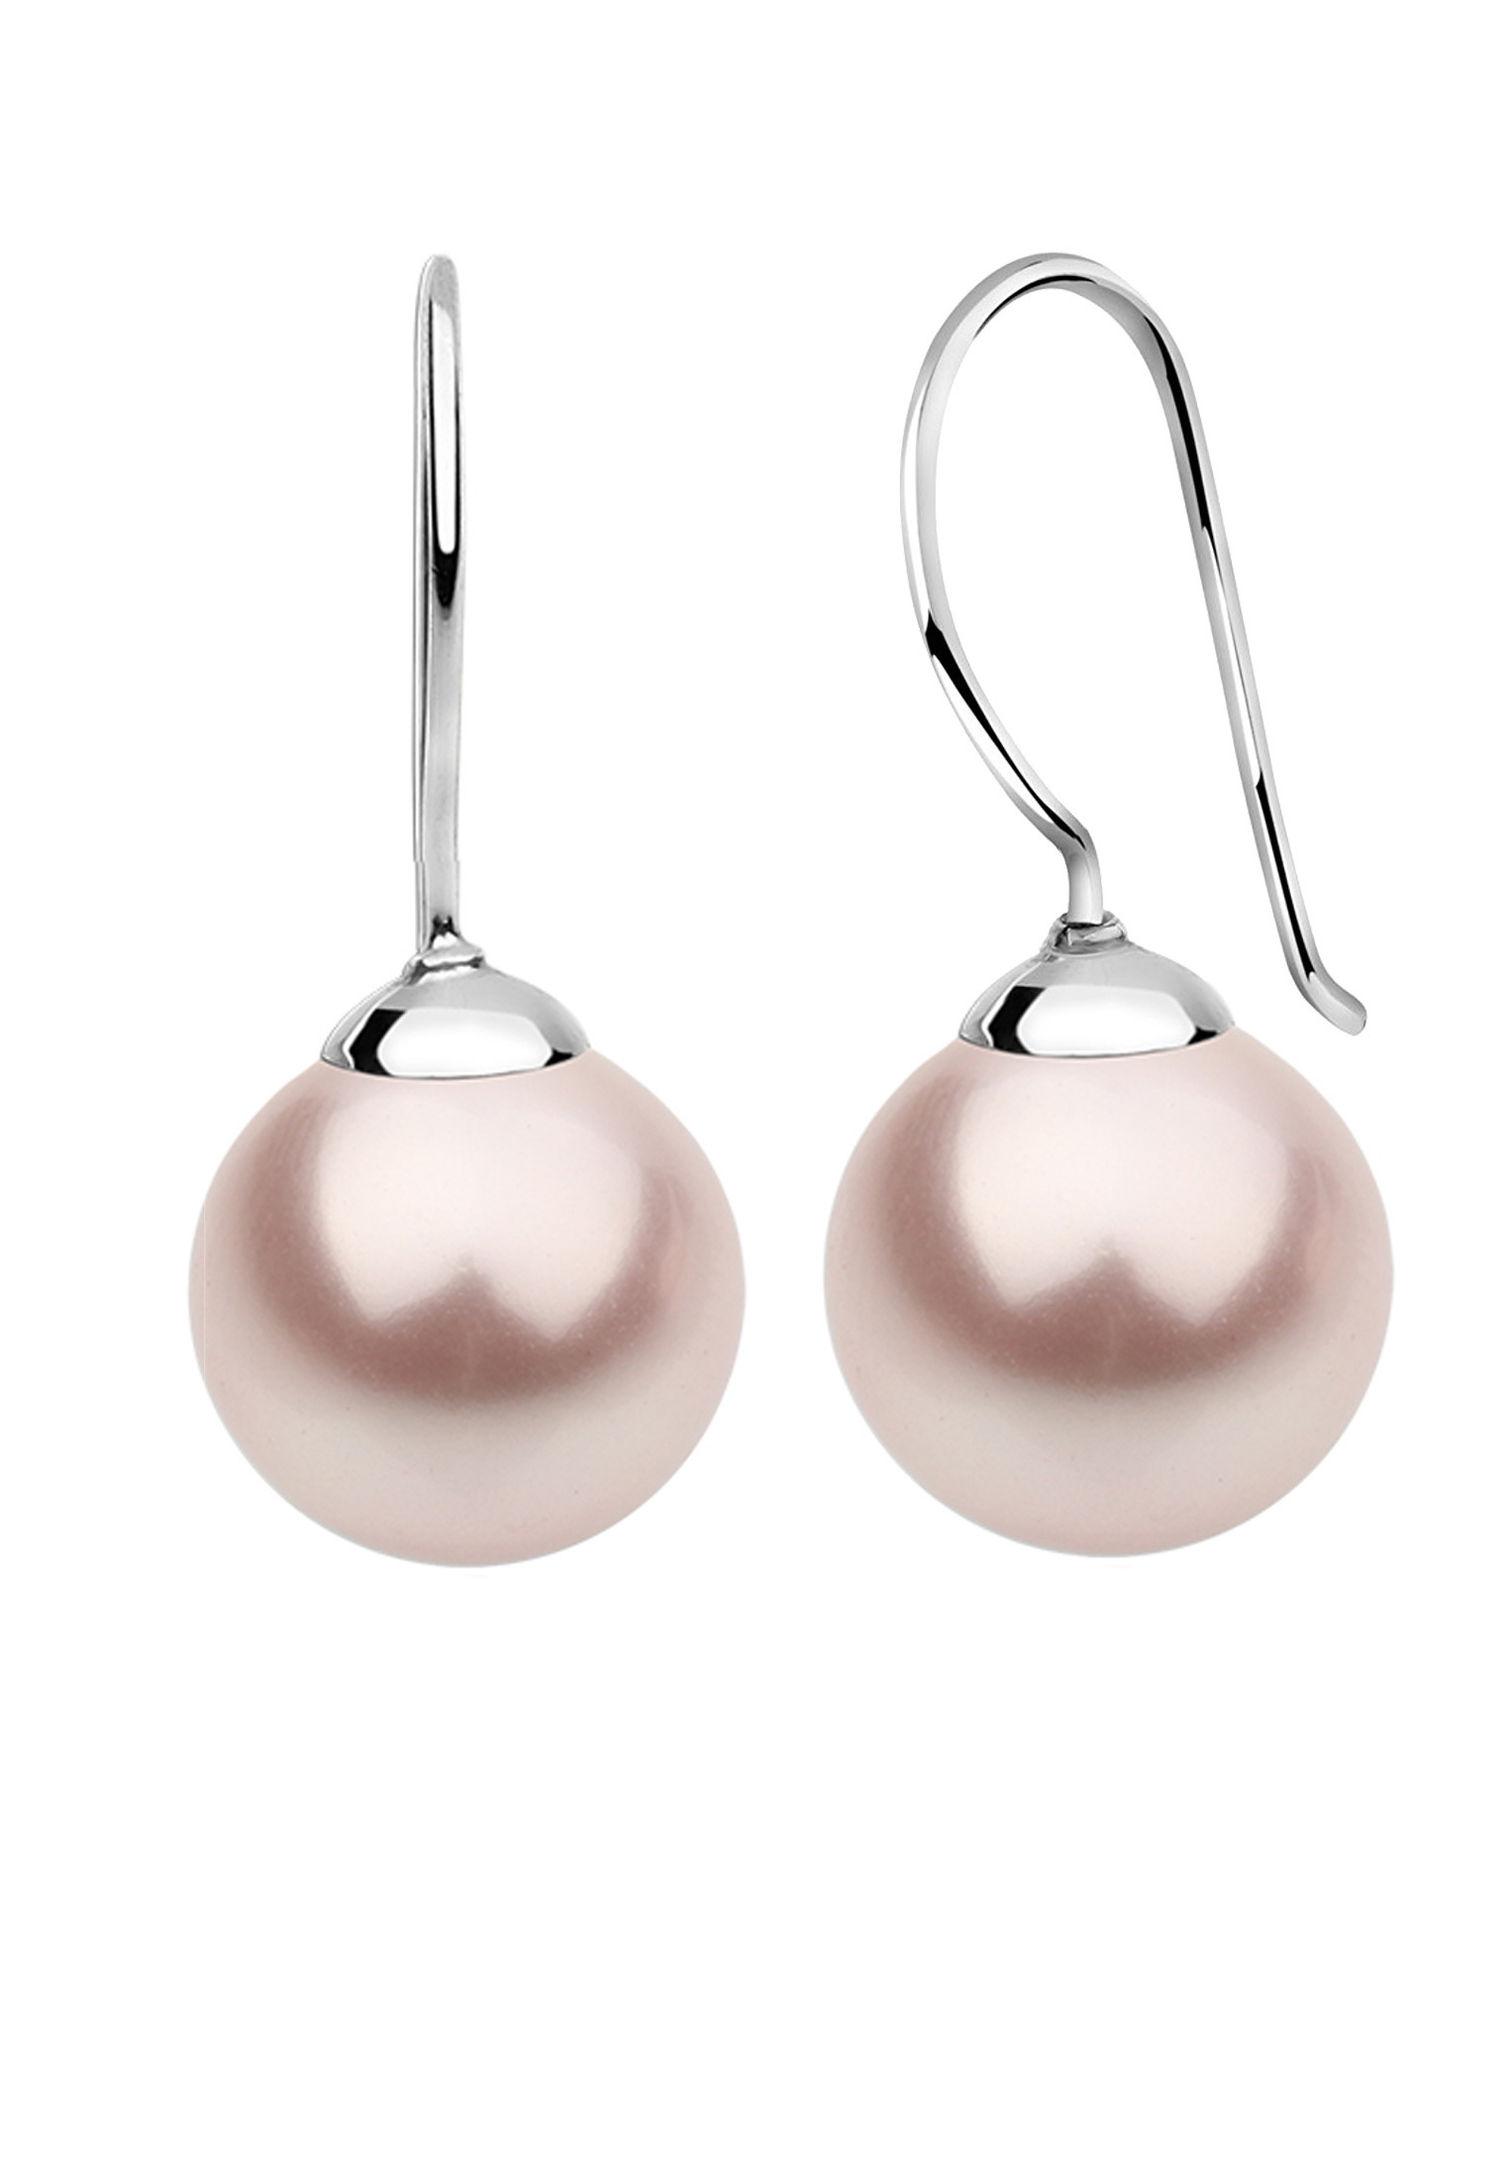 Nenalina Ohrringe Hänger Basic Synthetische Perle 925 Silber Farbe: Rosa |  Weltbild.de